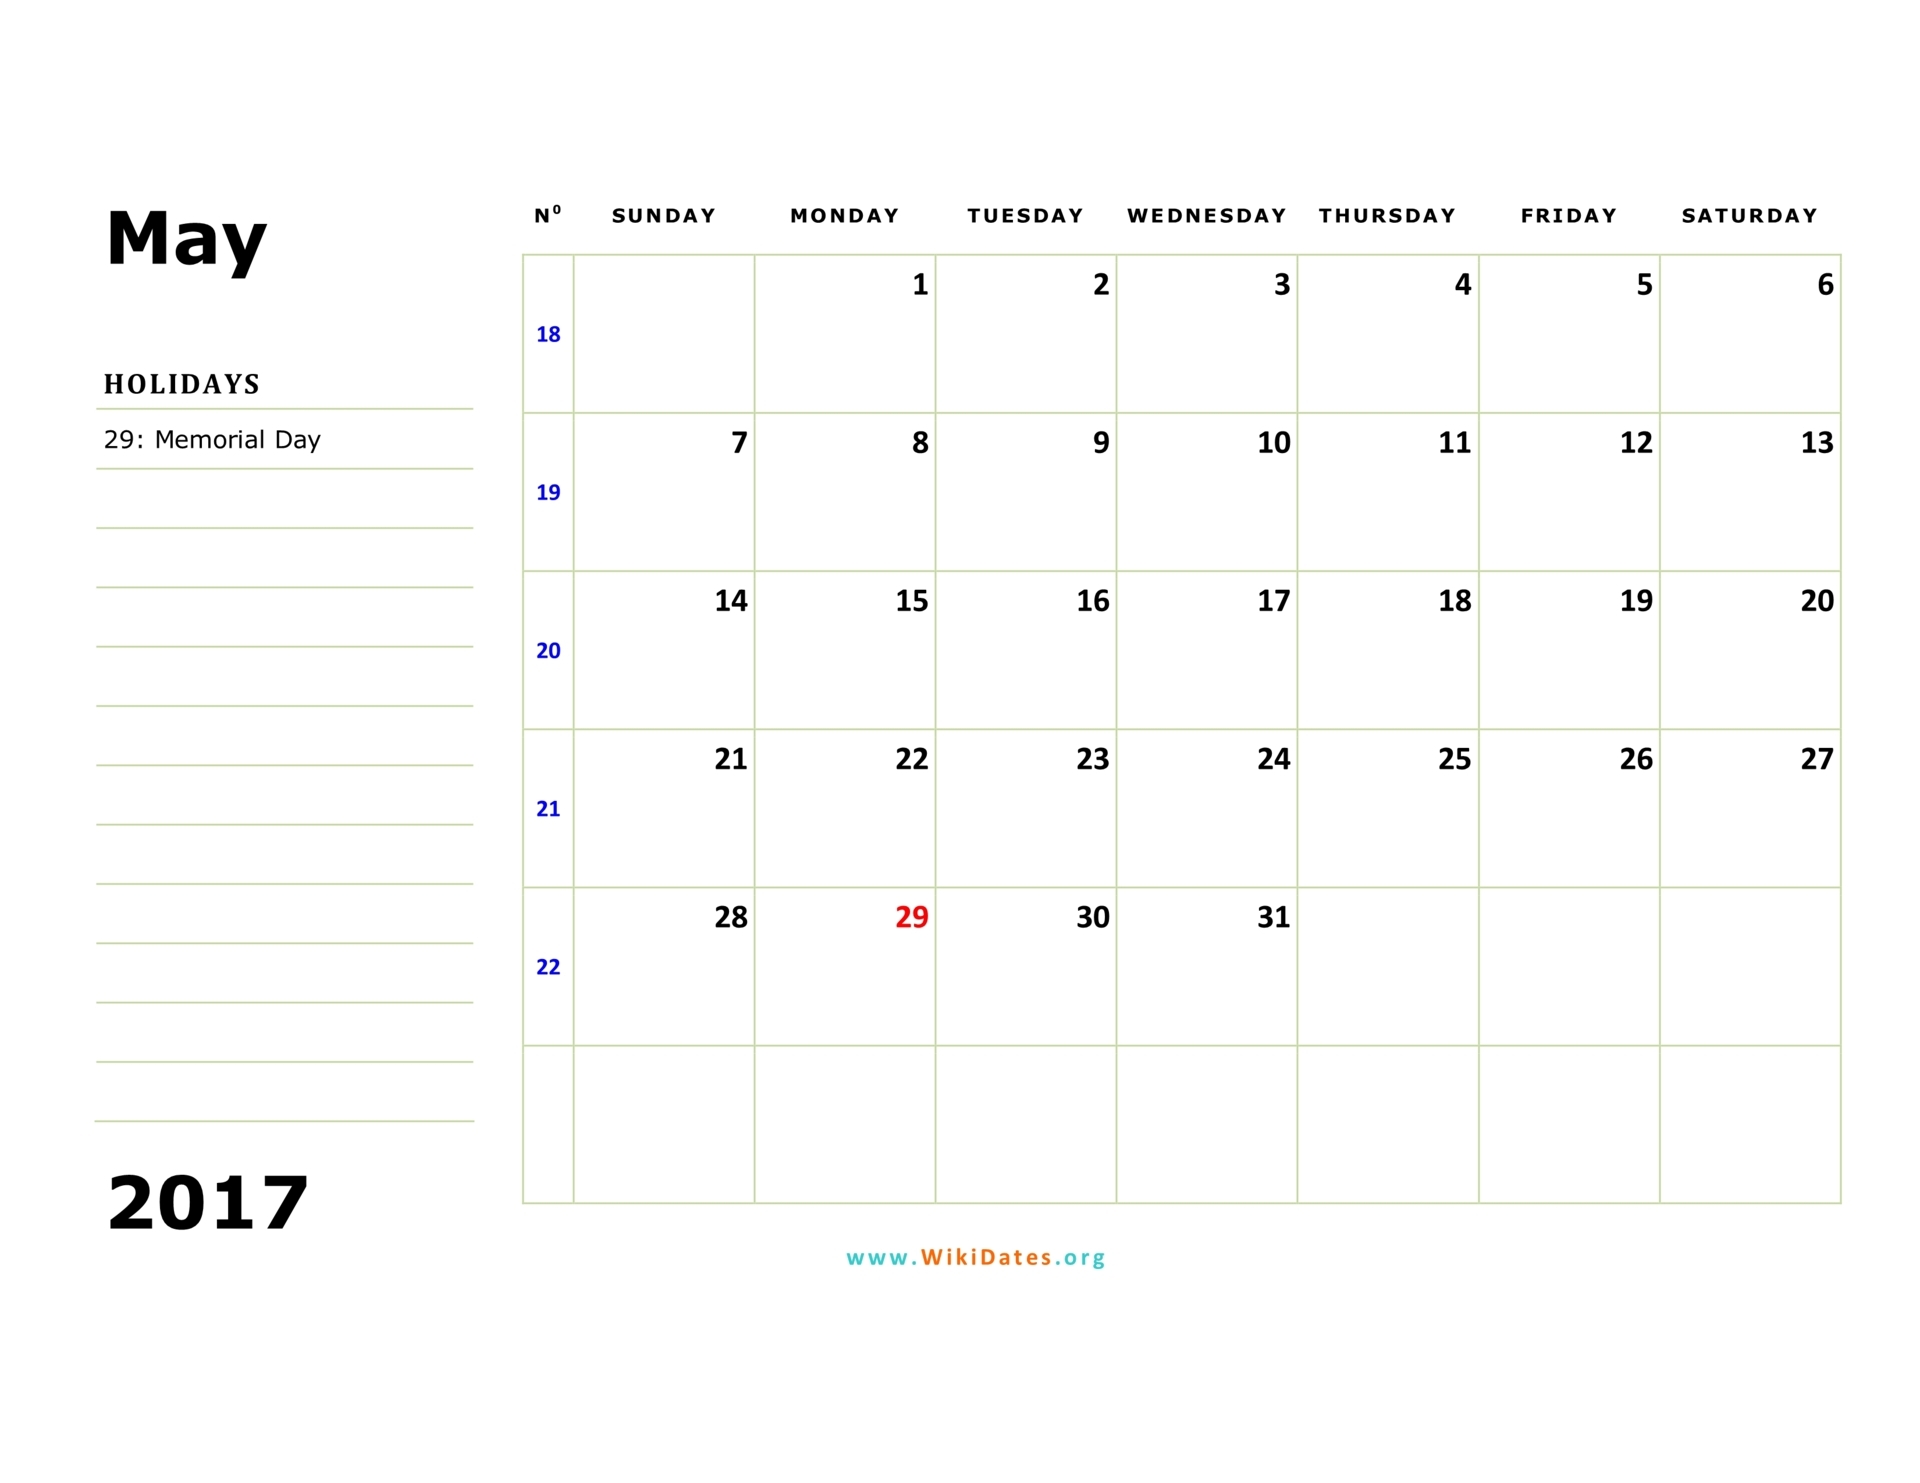 may-2017-calendar-wikidates